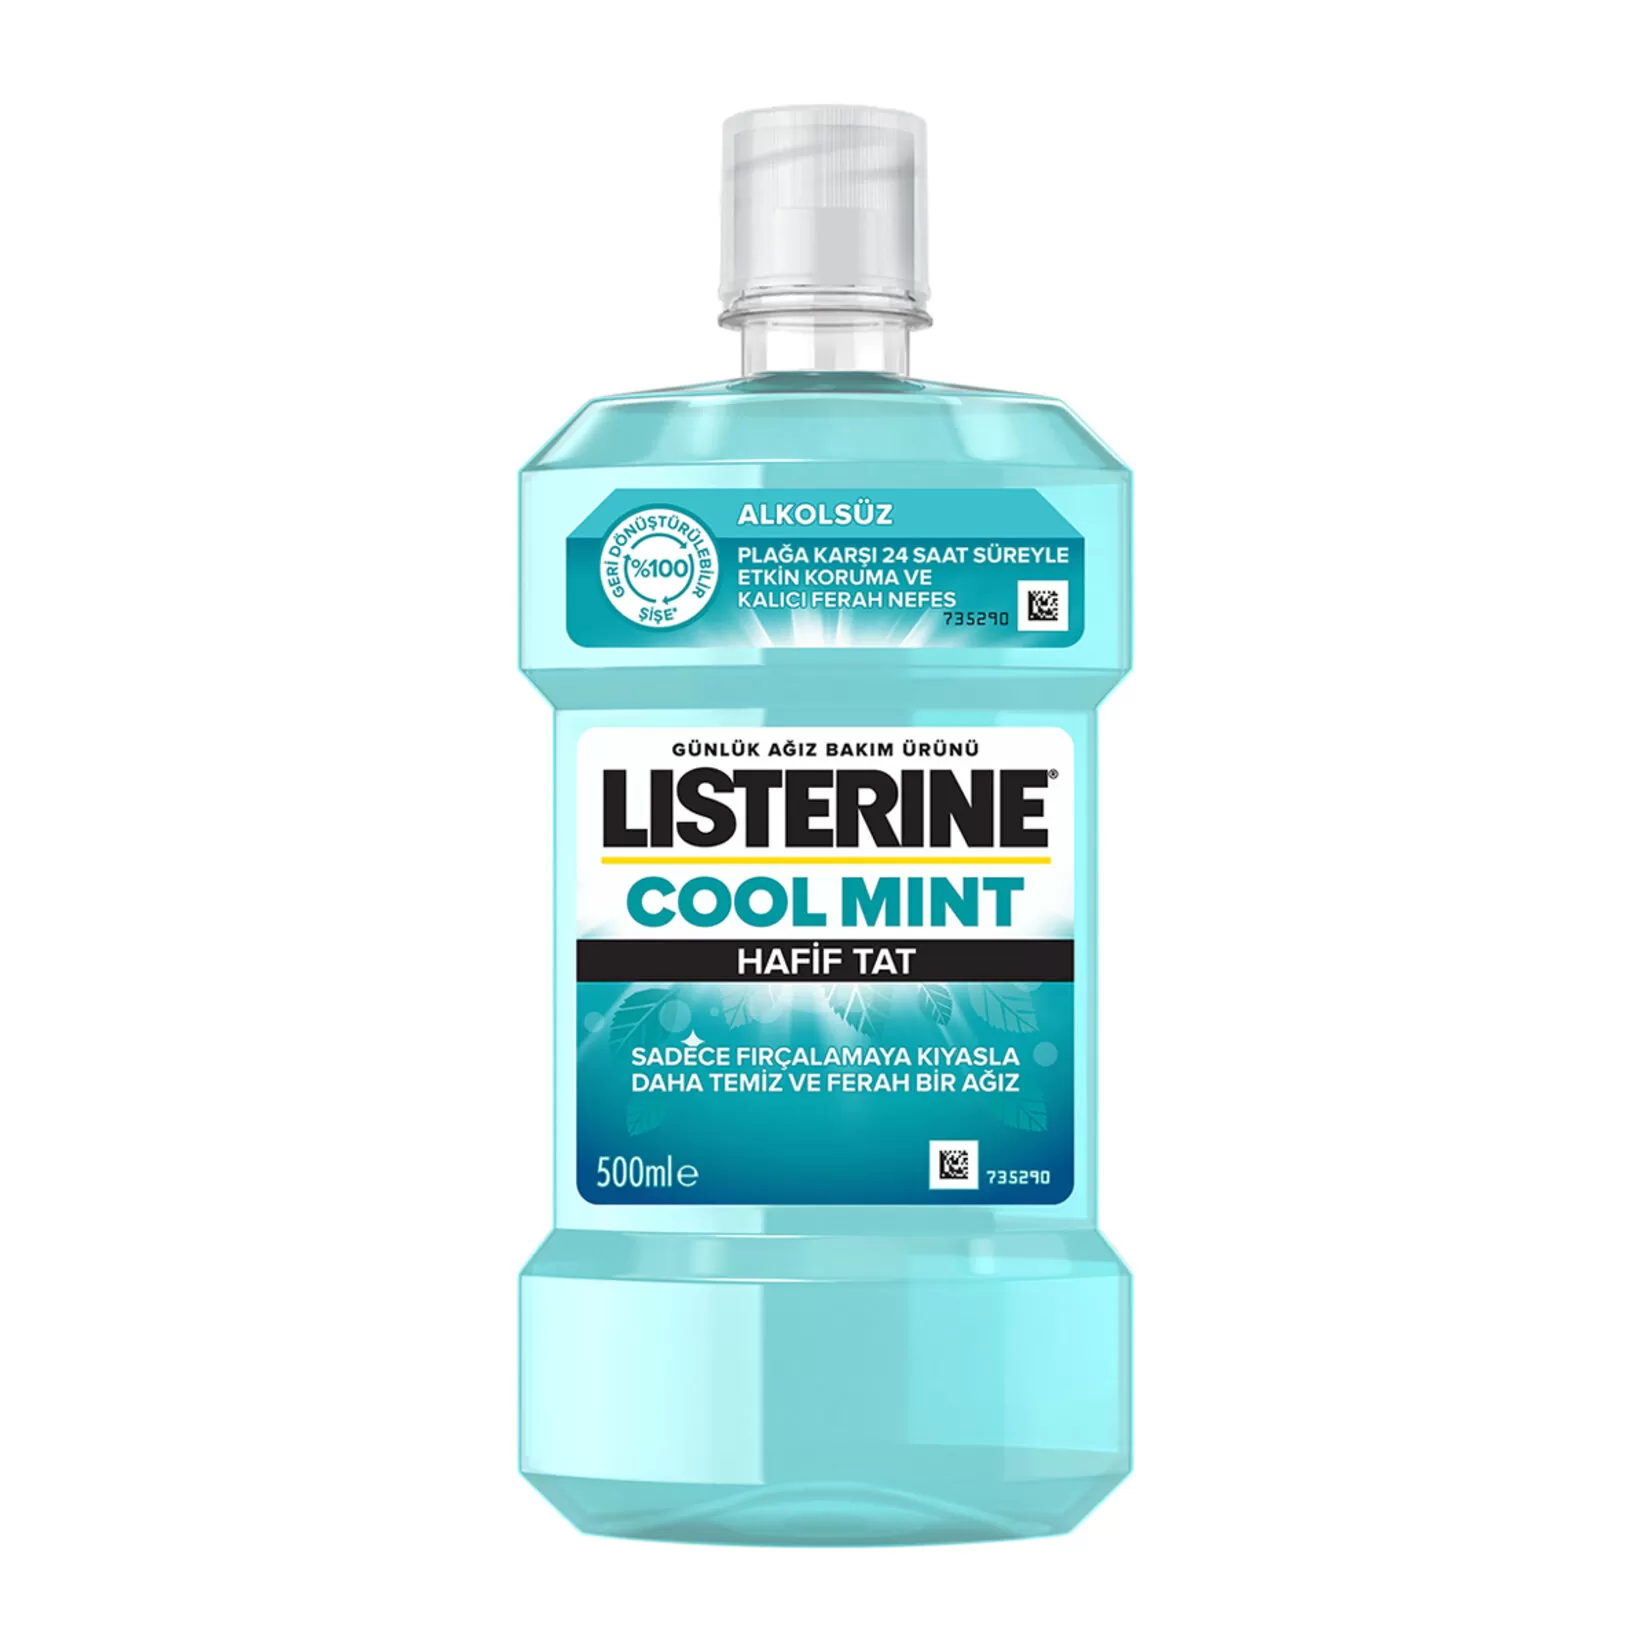 Listerine Cool Mint Hafif Tat Alkolsüz Ağız Bakım Suyu 500x4 2000 Ml